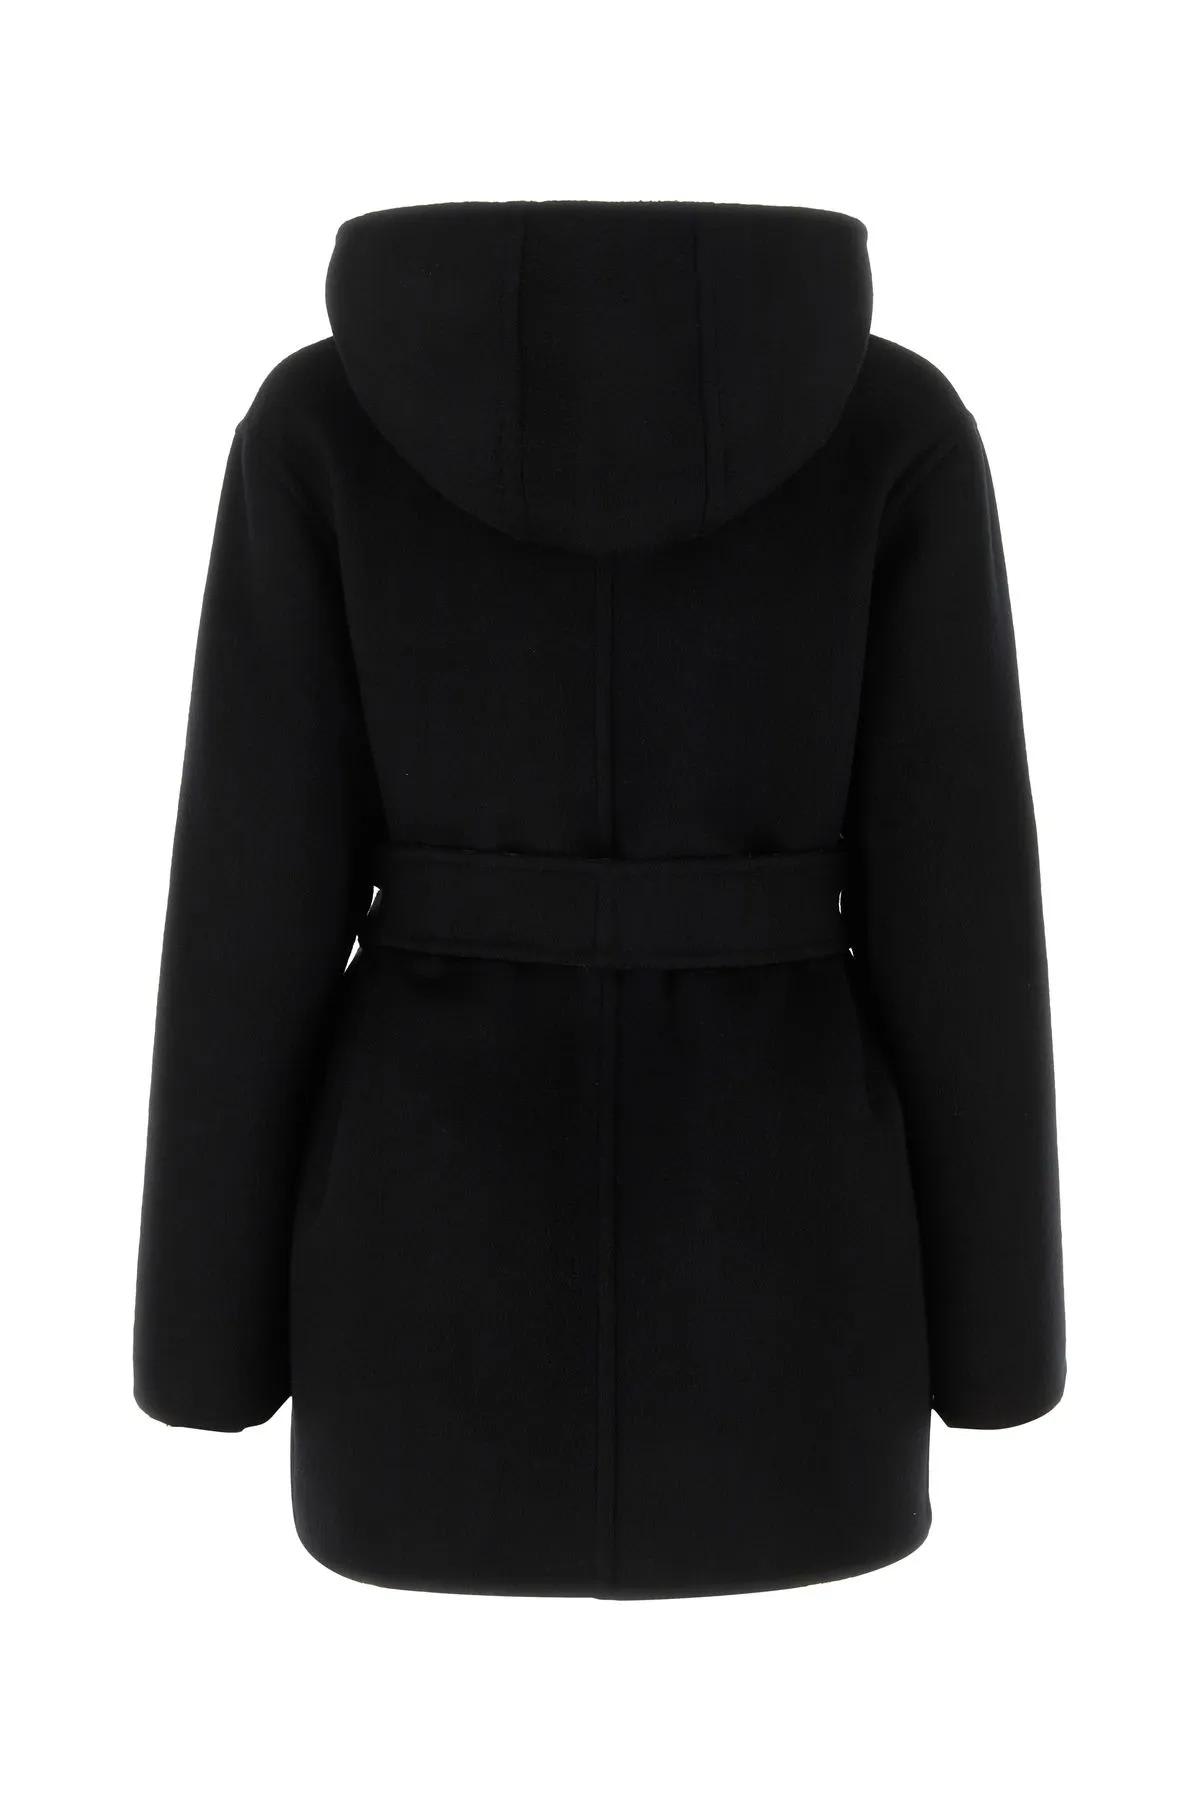 Shop Valentino Black Wool Blend Coat